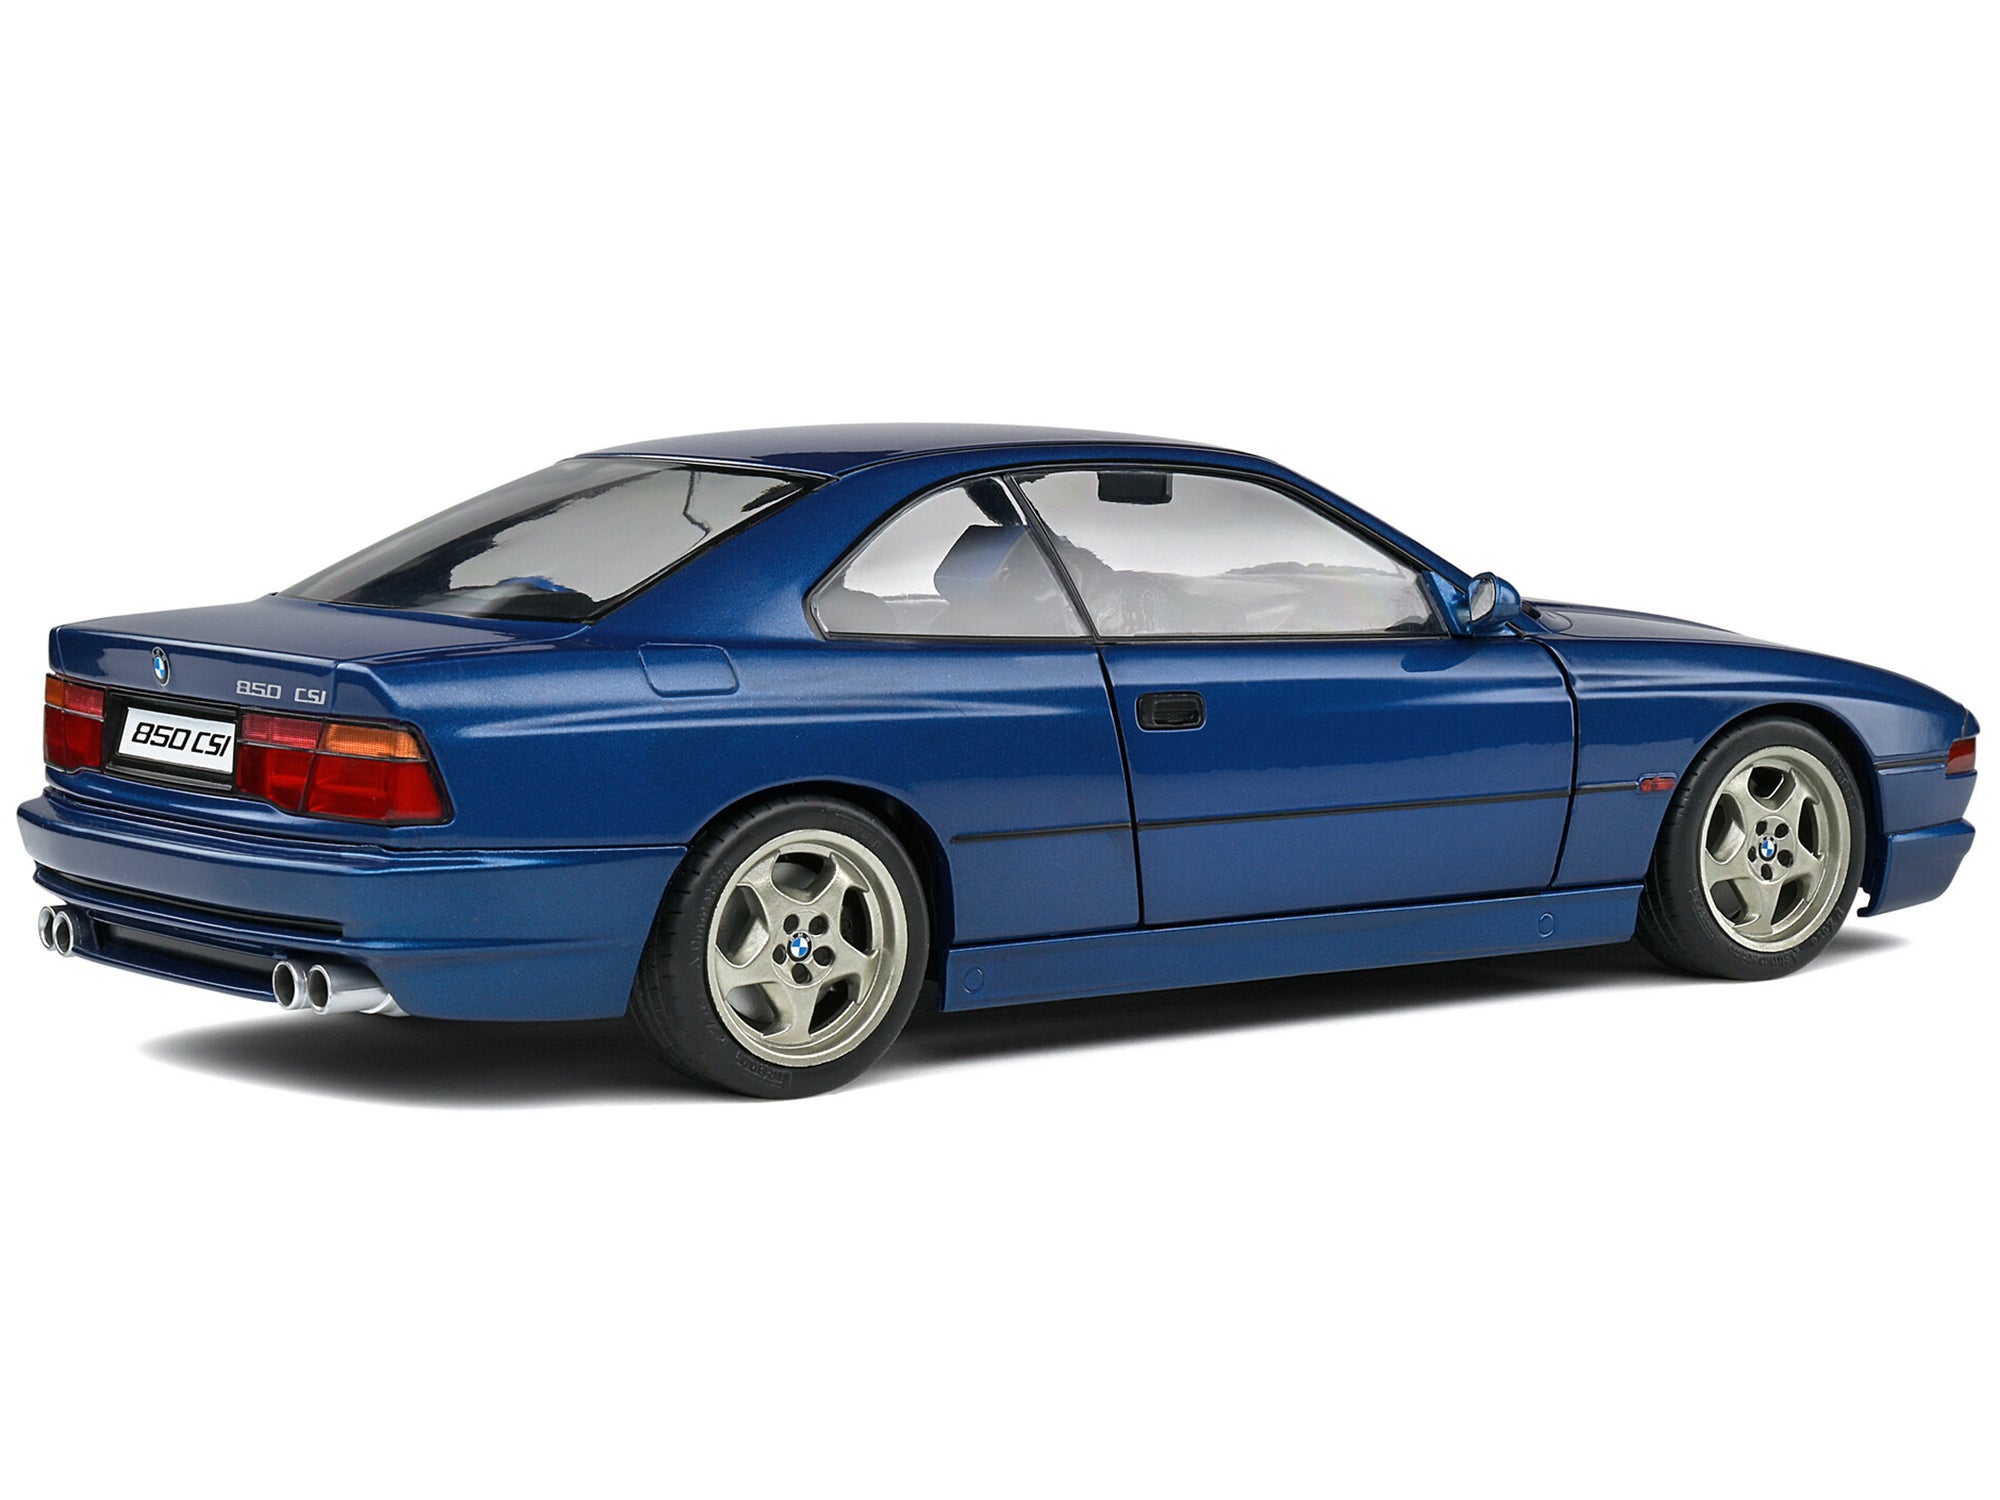 1990 BMW 850 CSI (E31) Tobaggo Blue Metallic 1/18 Diecast Model Car by Solido